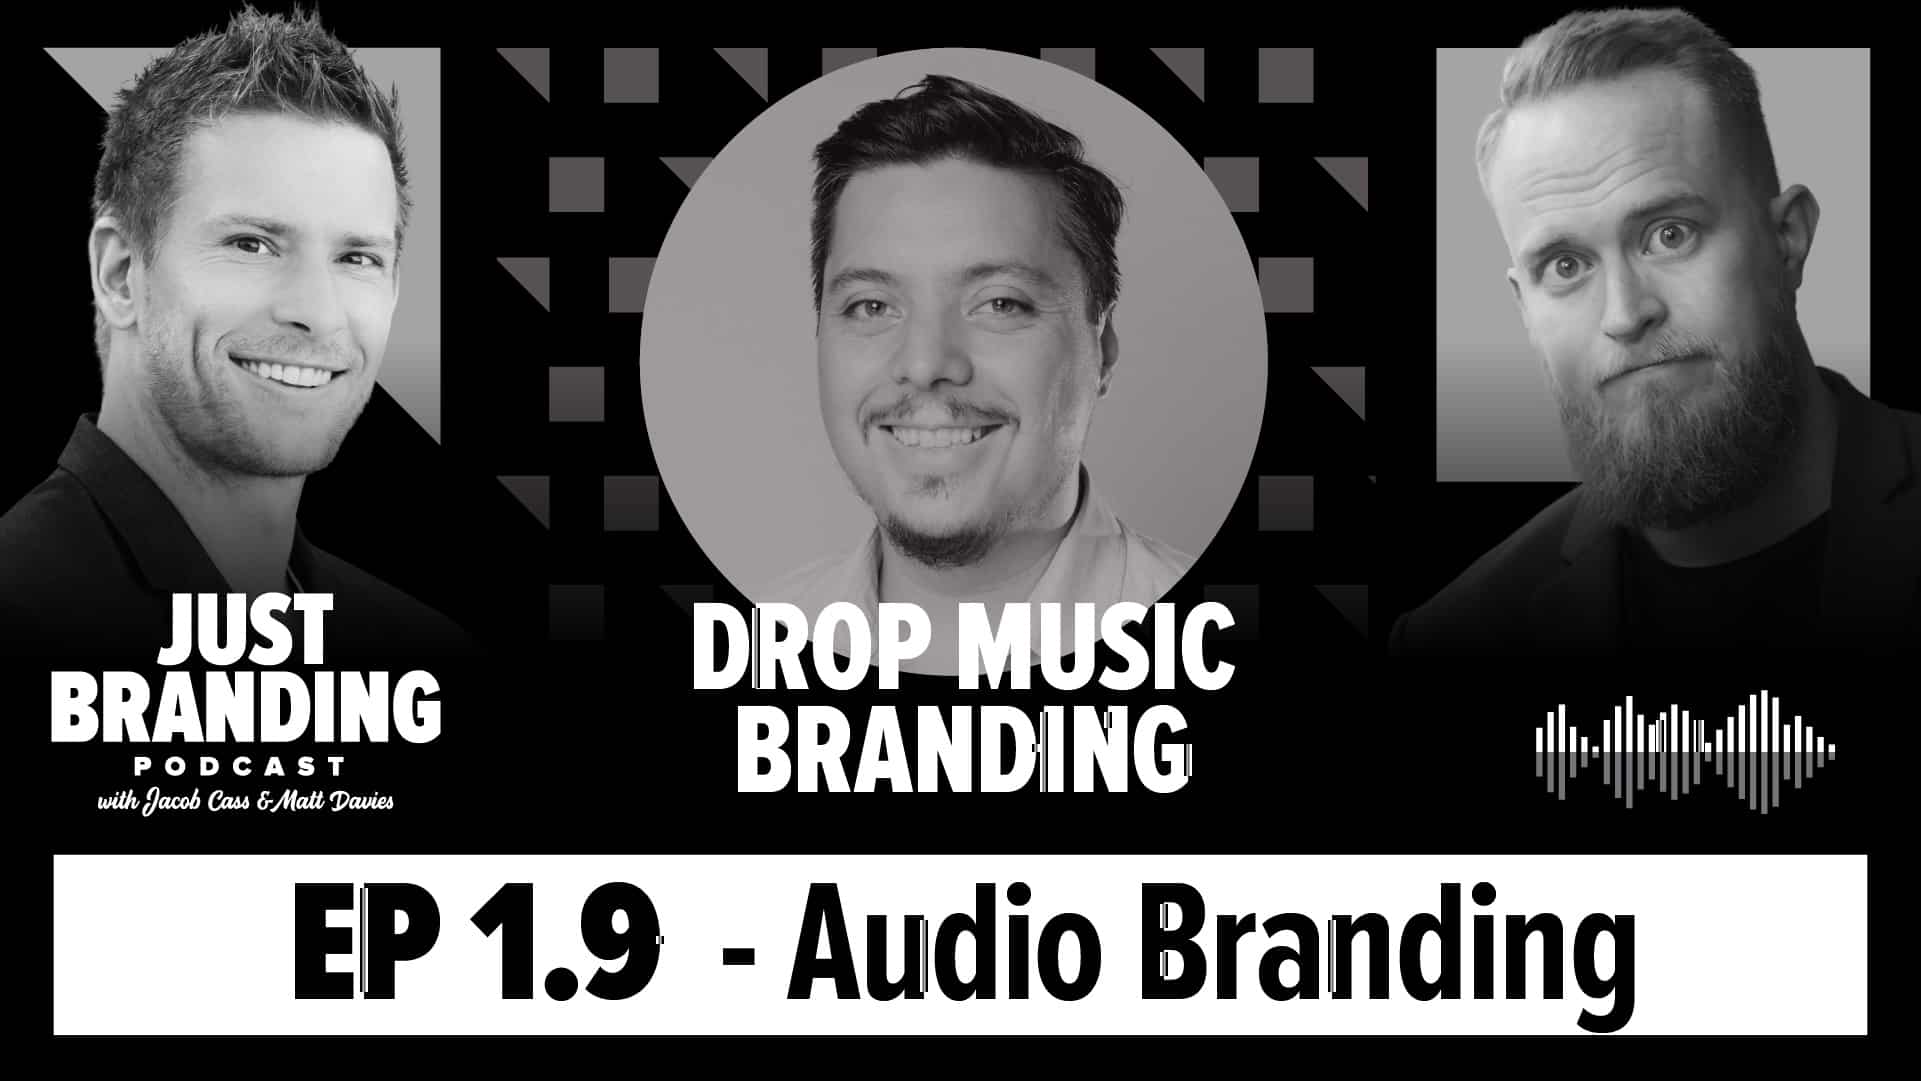 Audio Branding with Drop Music Branding